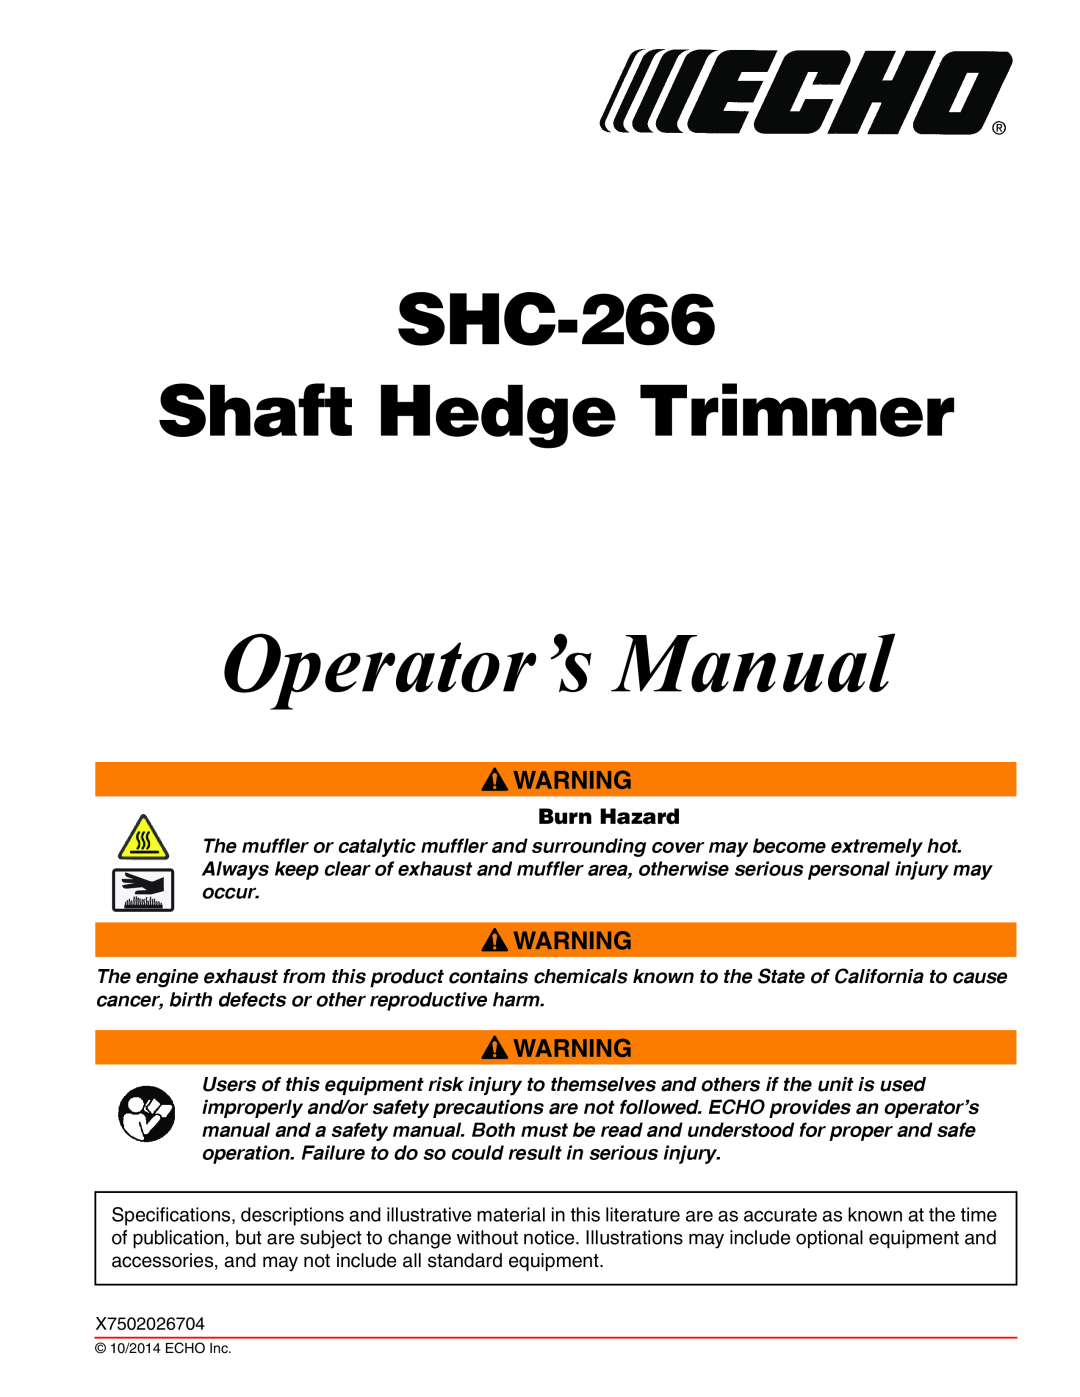 Echo X7722271404, X772000164 specifications Burn Hazard, Operator’s Manual, SHC-266 Shaft Hedge Trimmer 